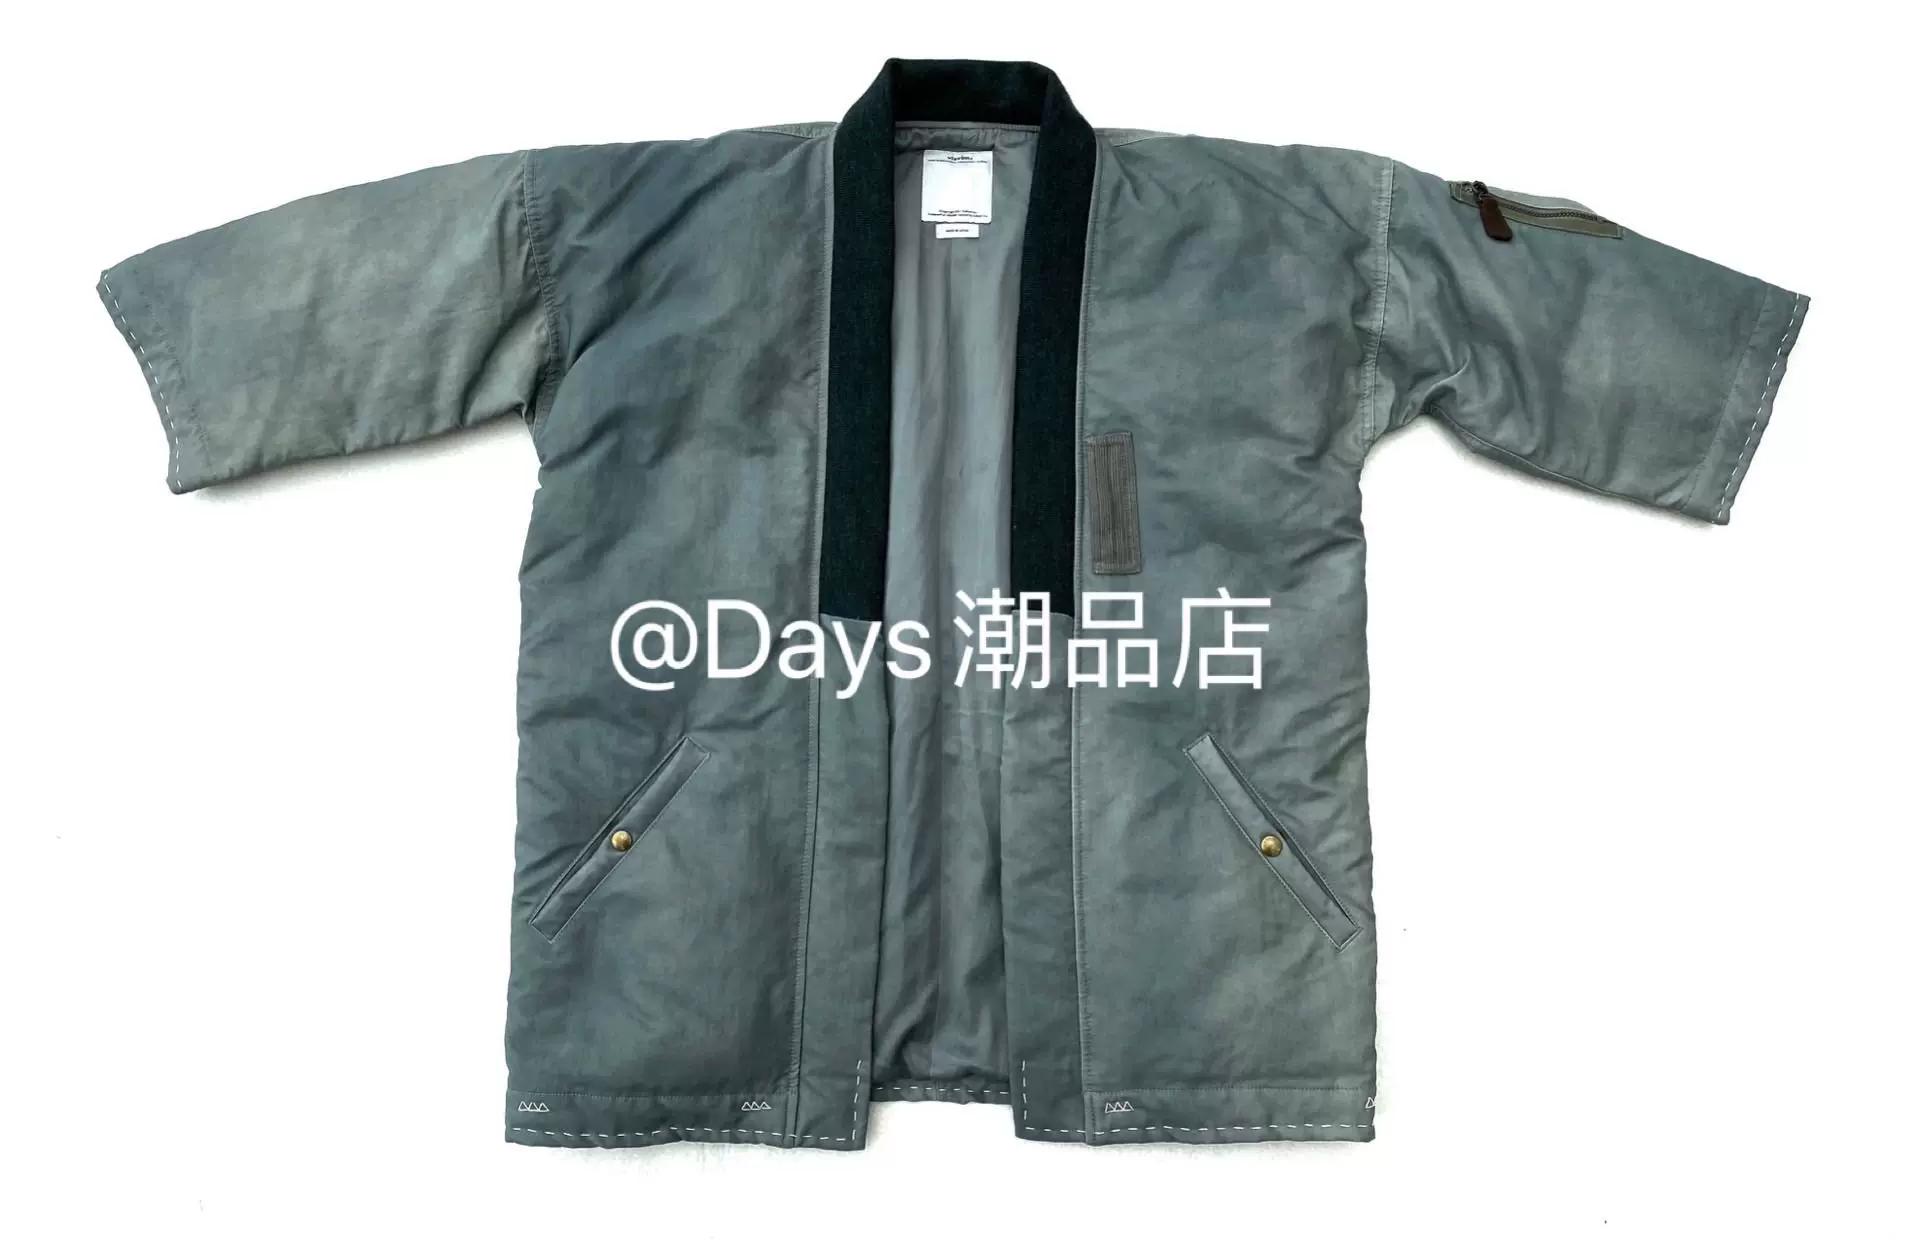 80360円 【本日特価】 visvim sanjuro kimono jacket journeyman